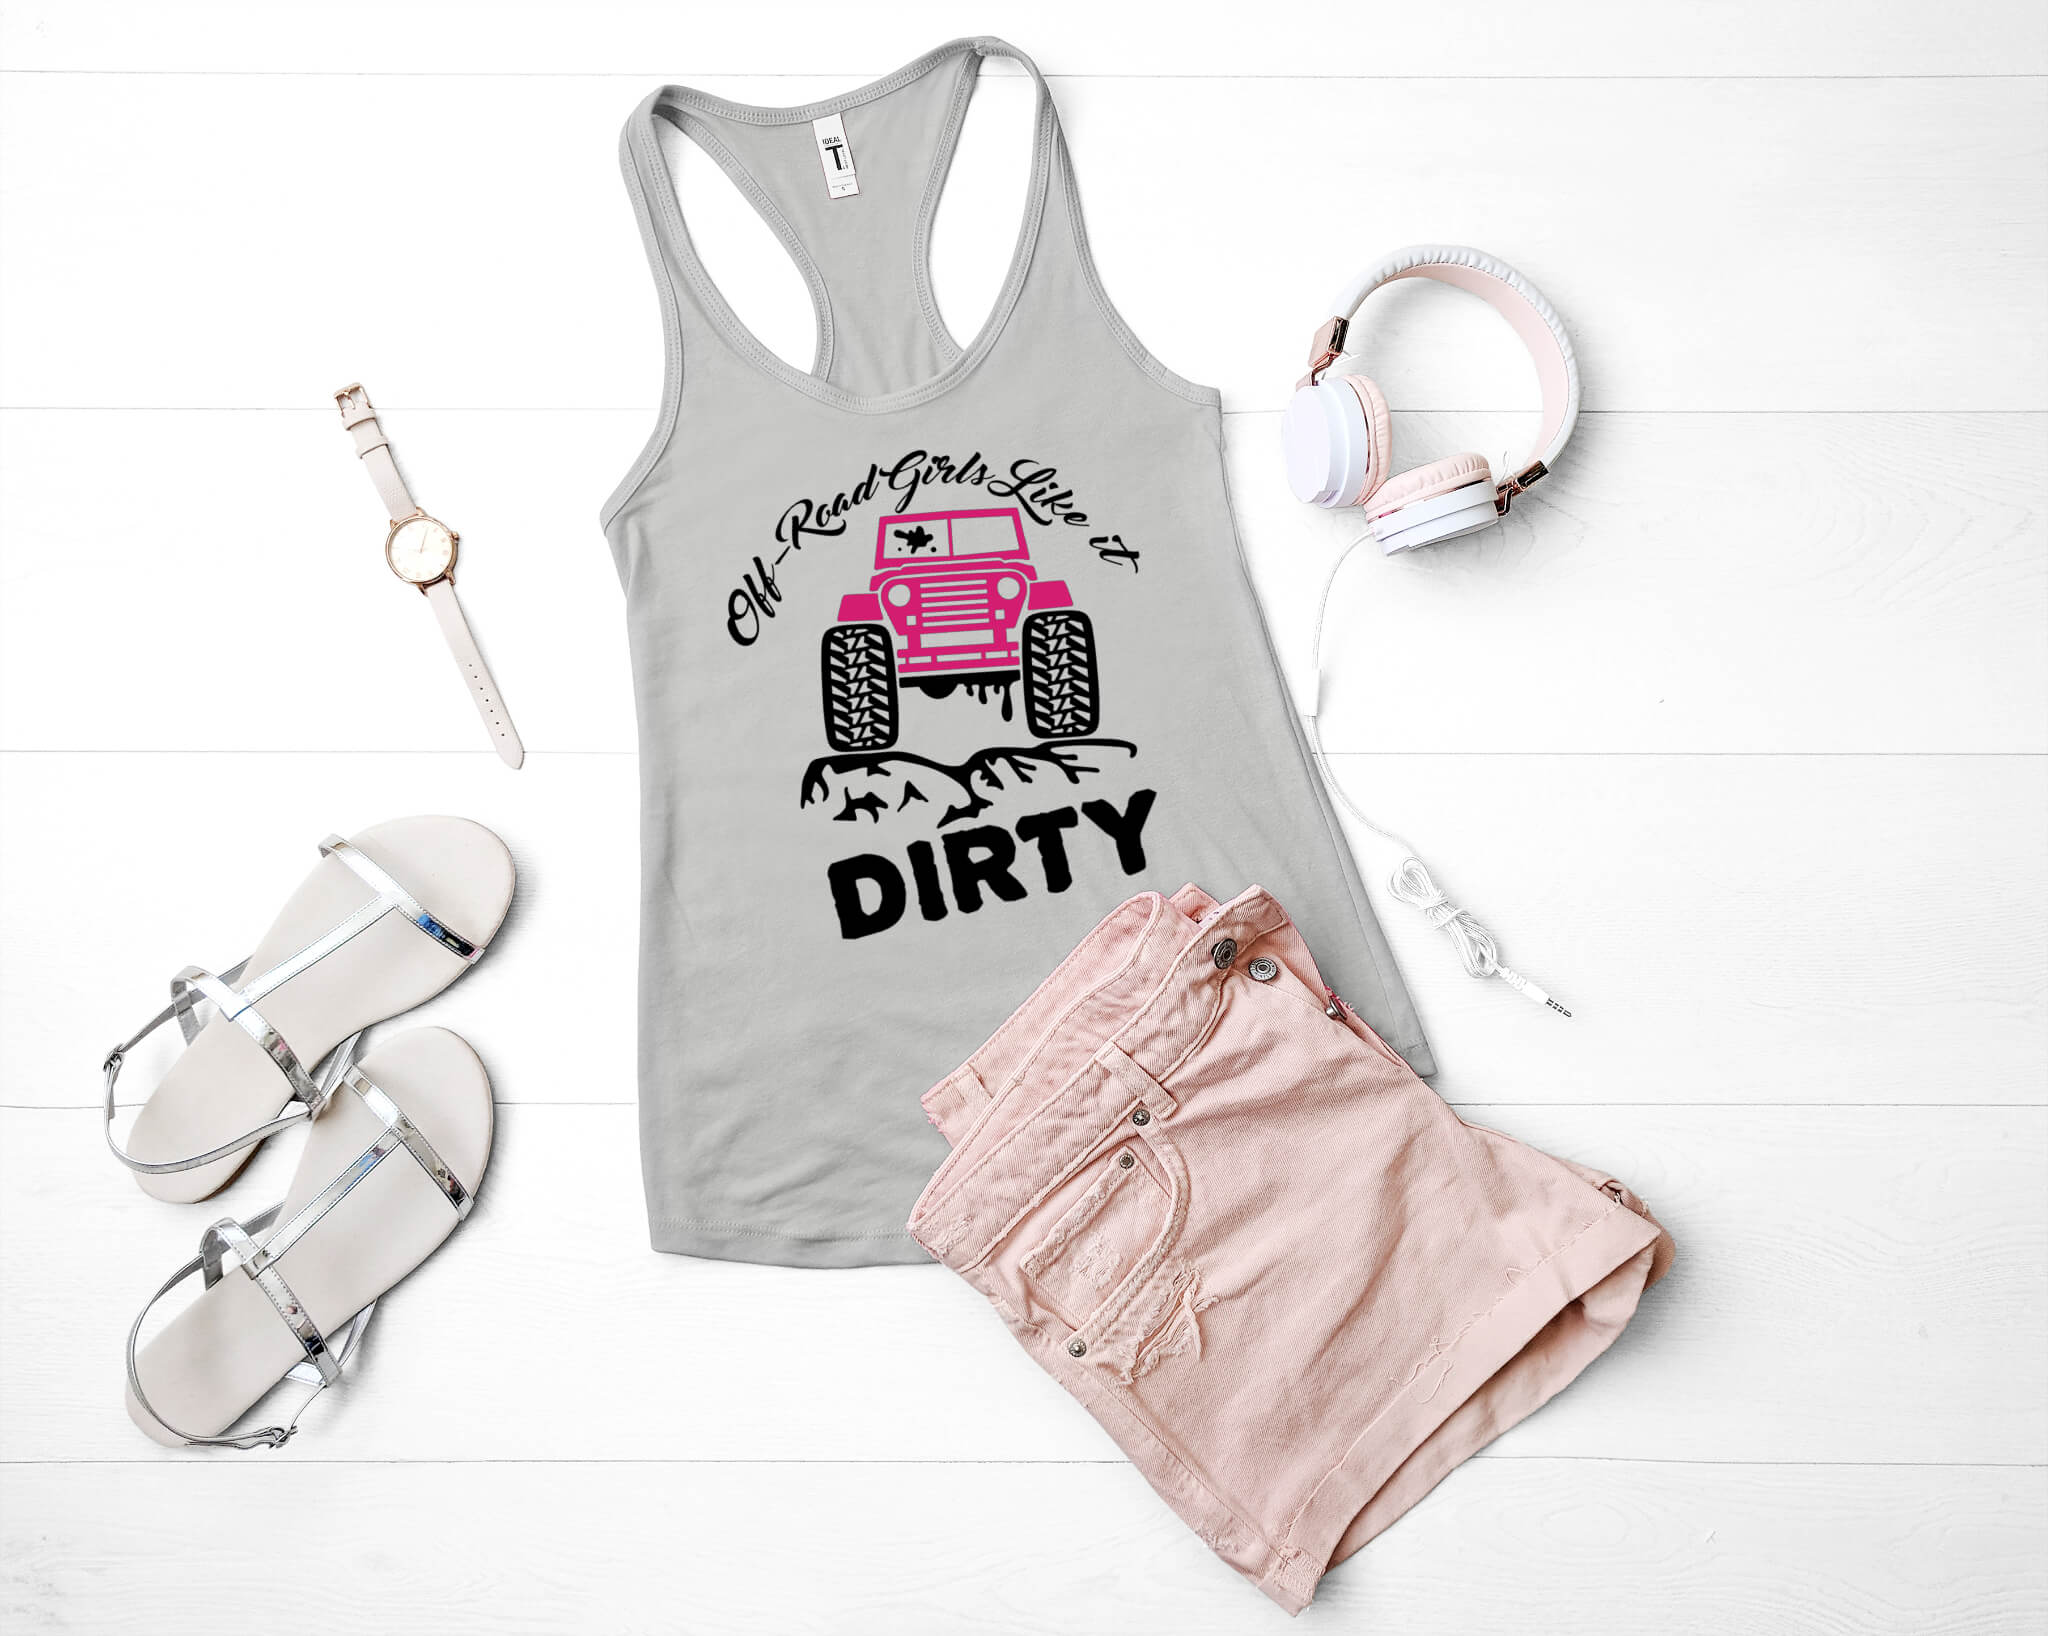 Racing - Off-Road Girl's Like It Dirty Customizable Women's Jeep Graphic Print Tank Top